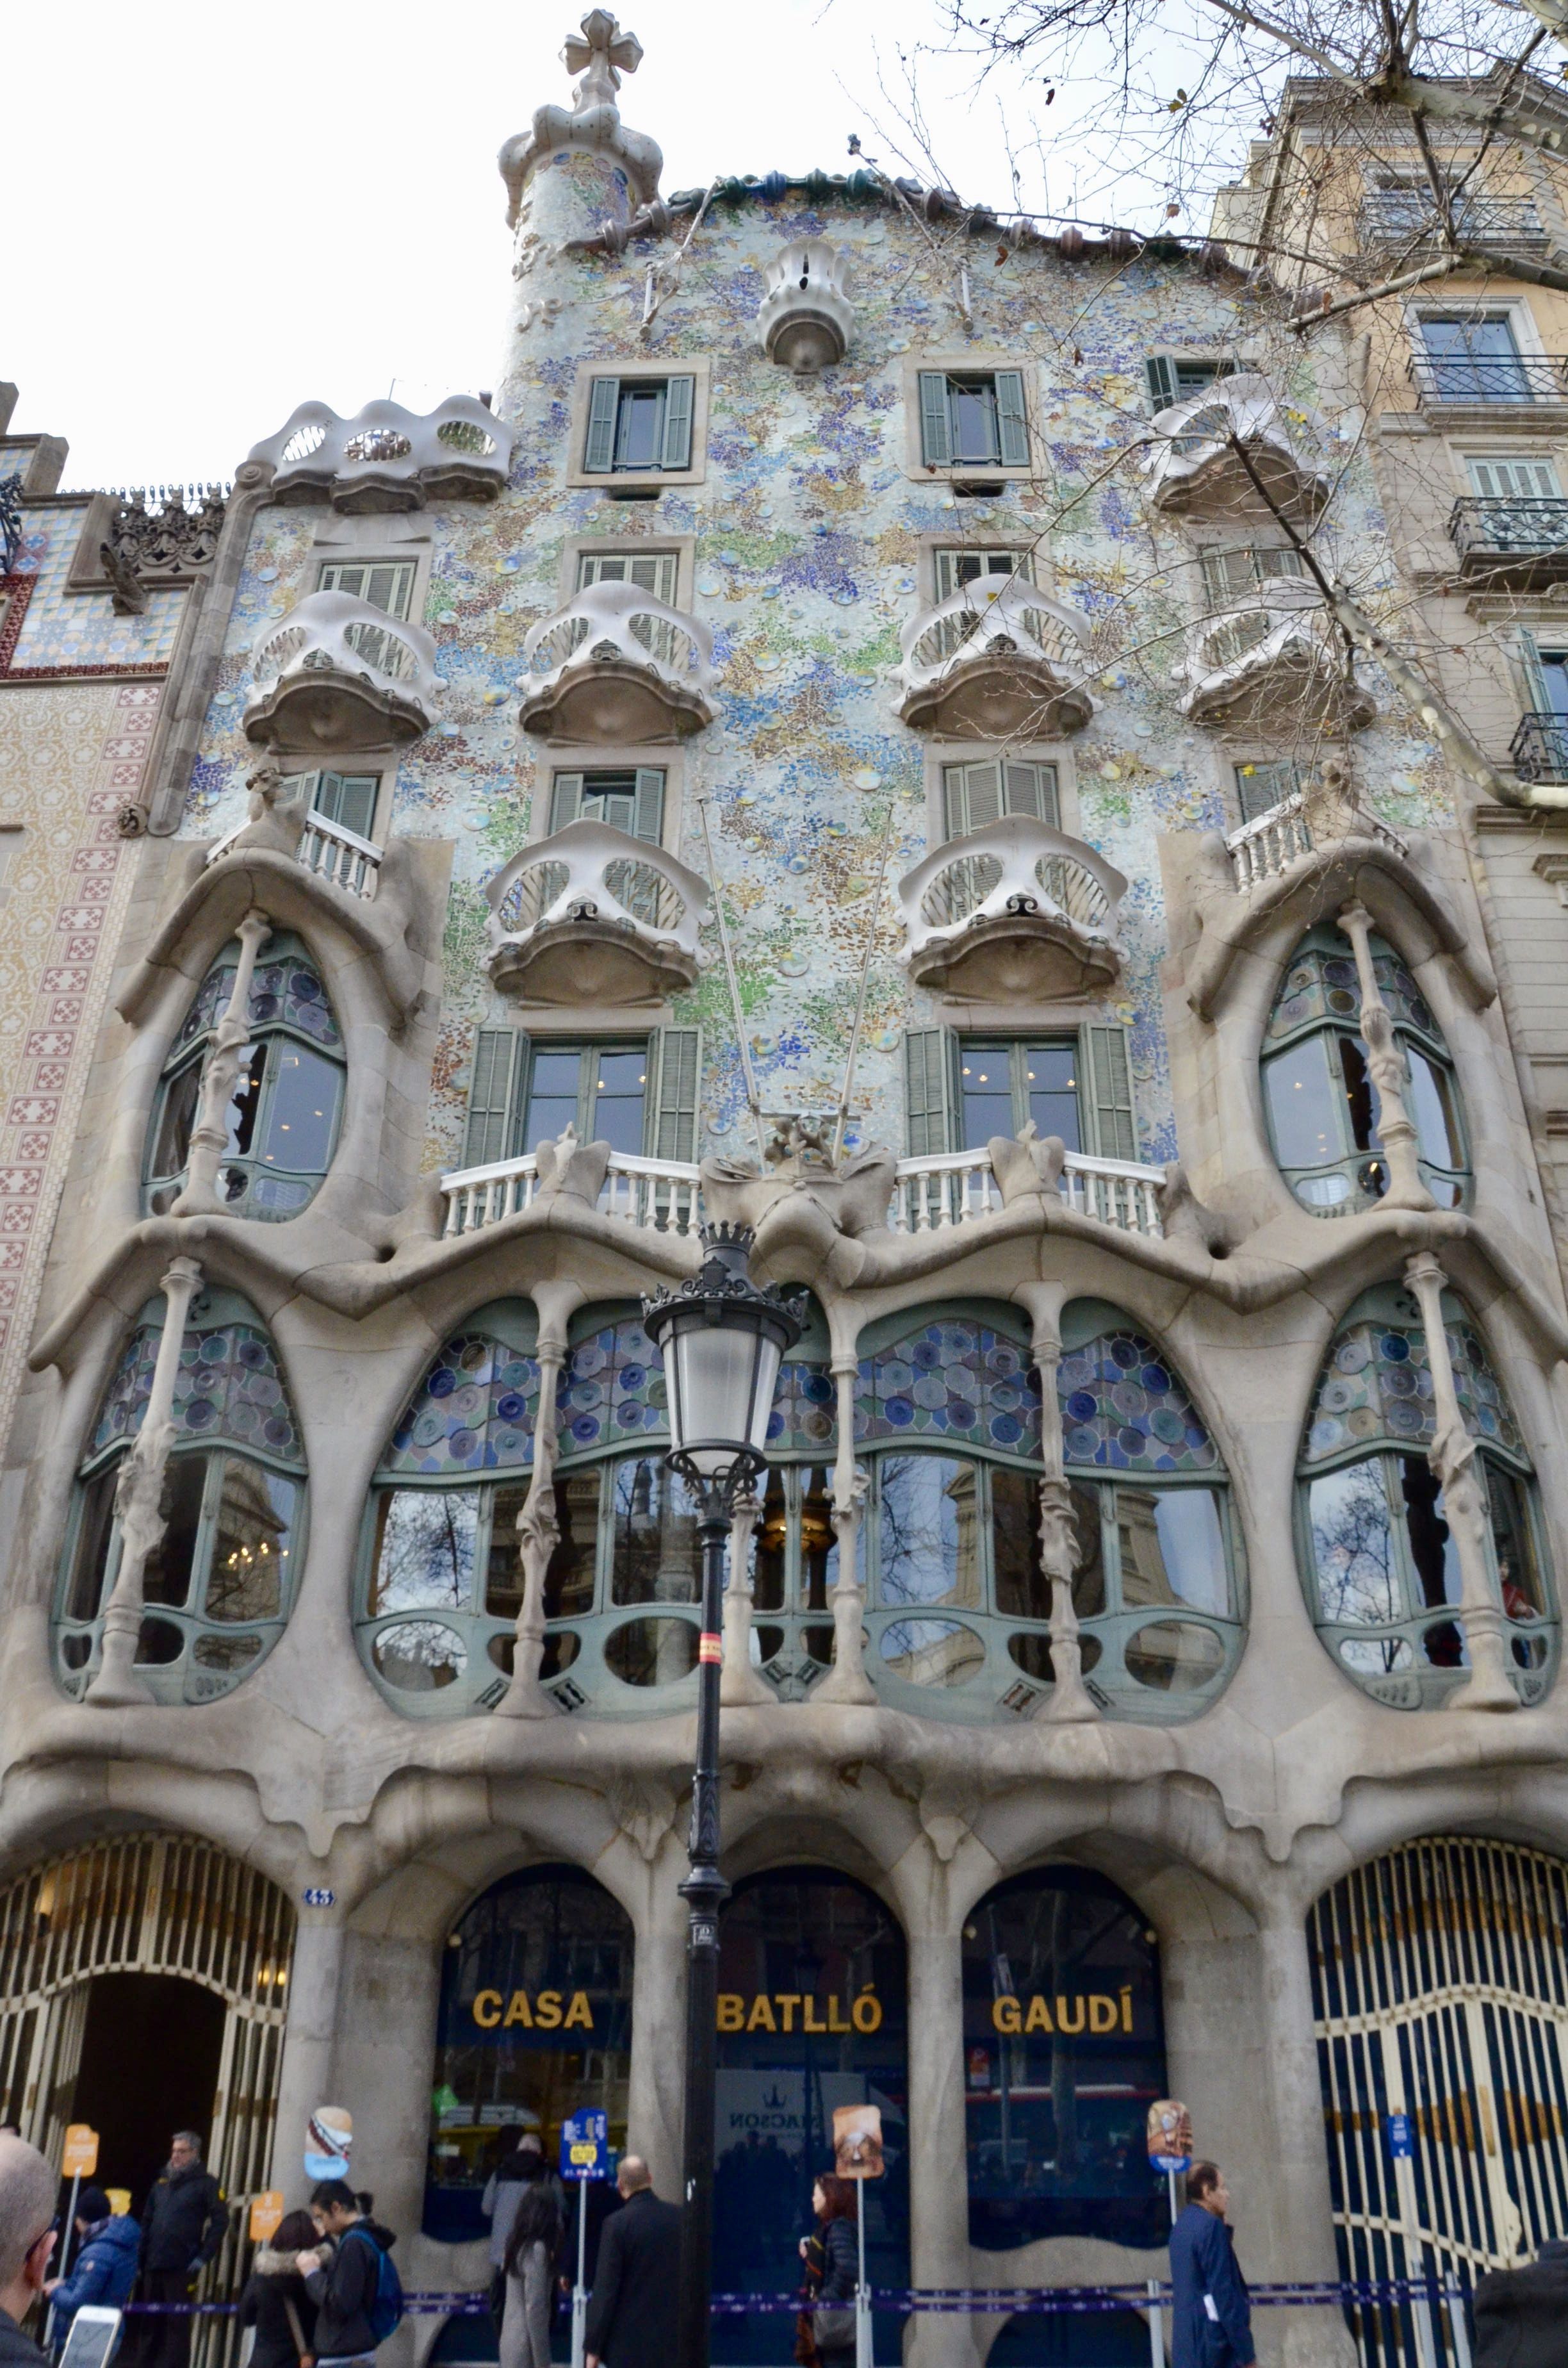 Casa Batlló, Antoni Gaudí Modernist Museum, Barcelona: All year